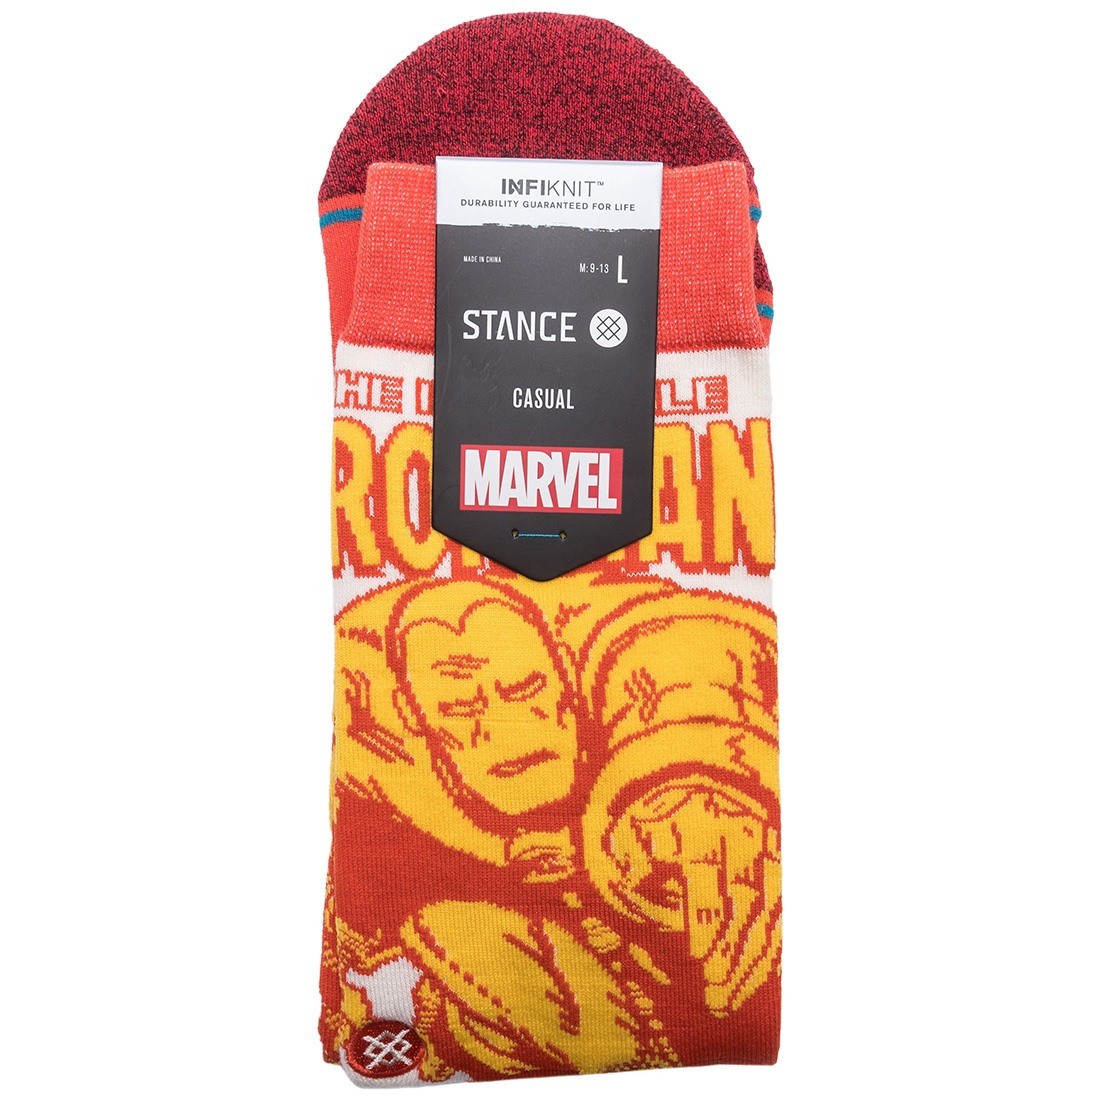 Stance x Marvel Iron Man Men Iron Man Marquee Socks red